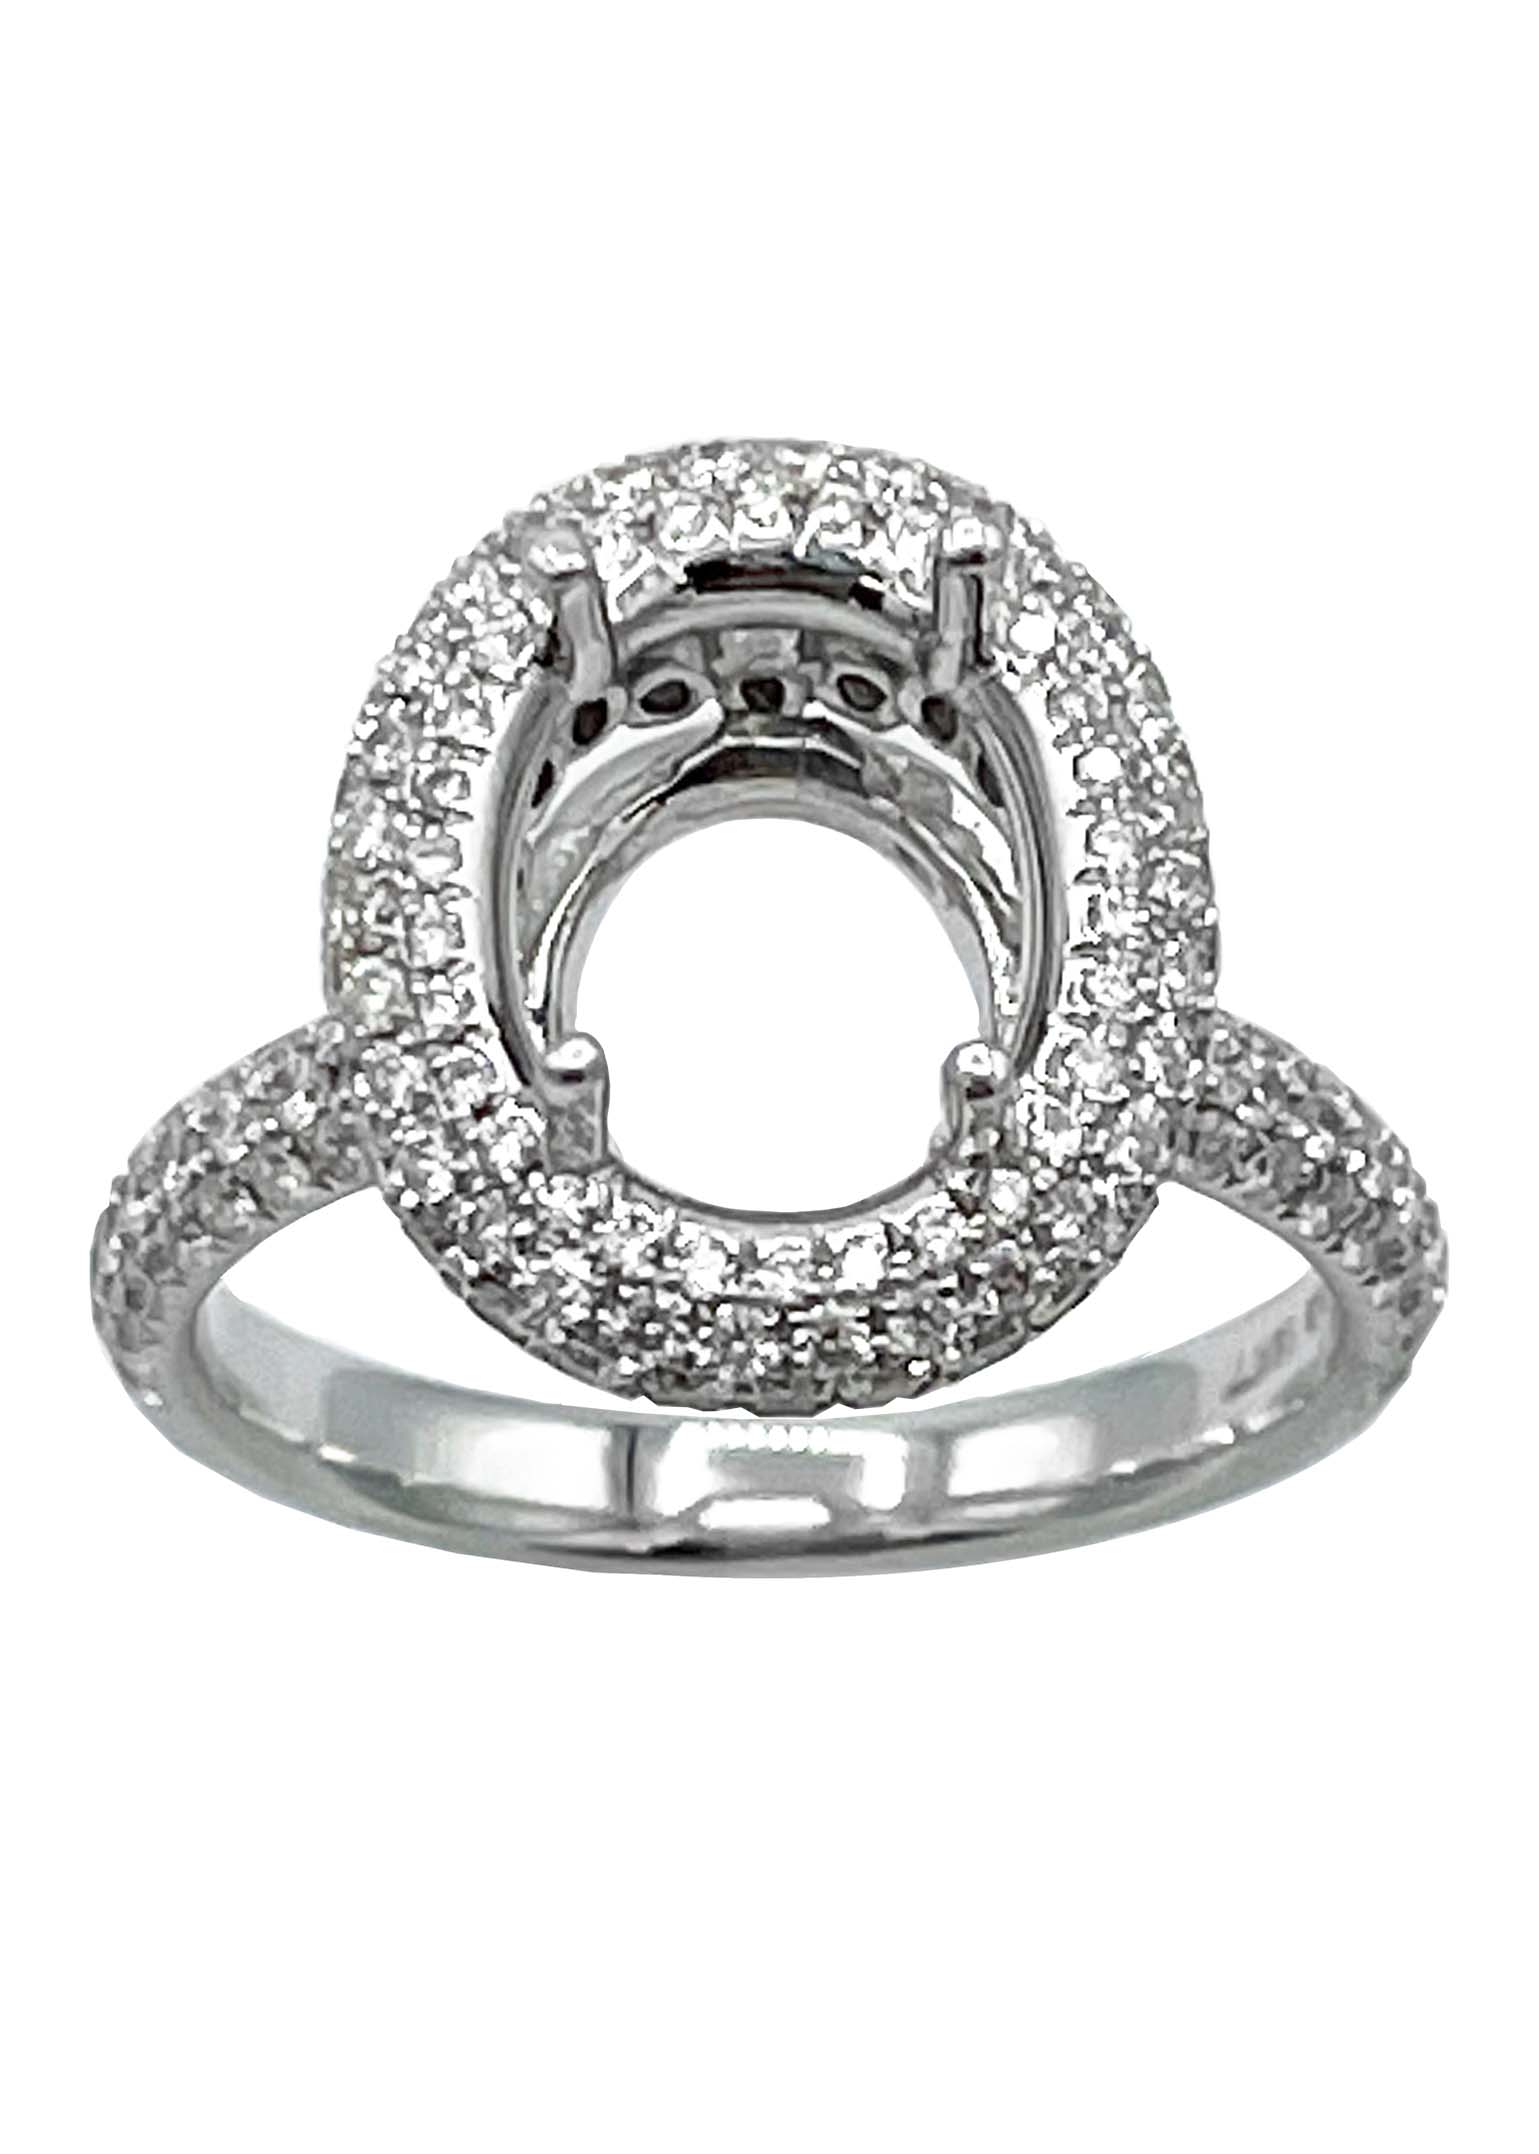 18k White Gold Diamond Engagement Ring Setting Image